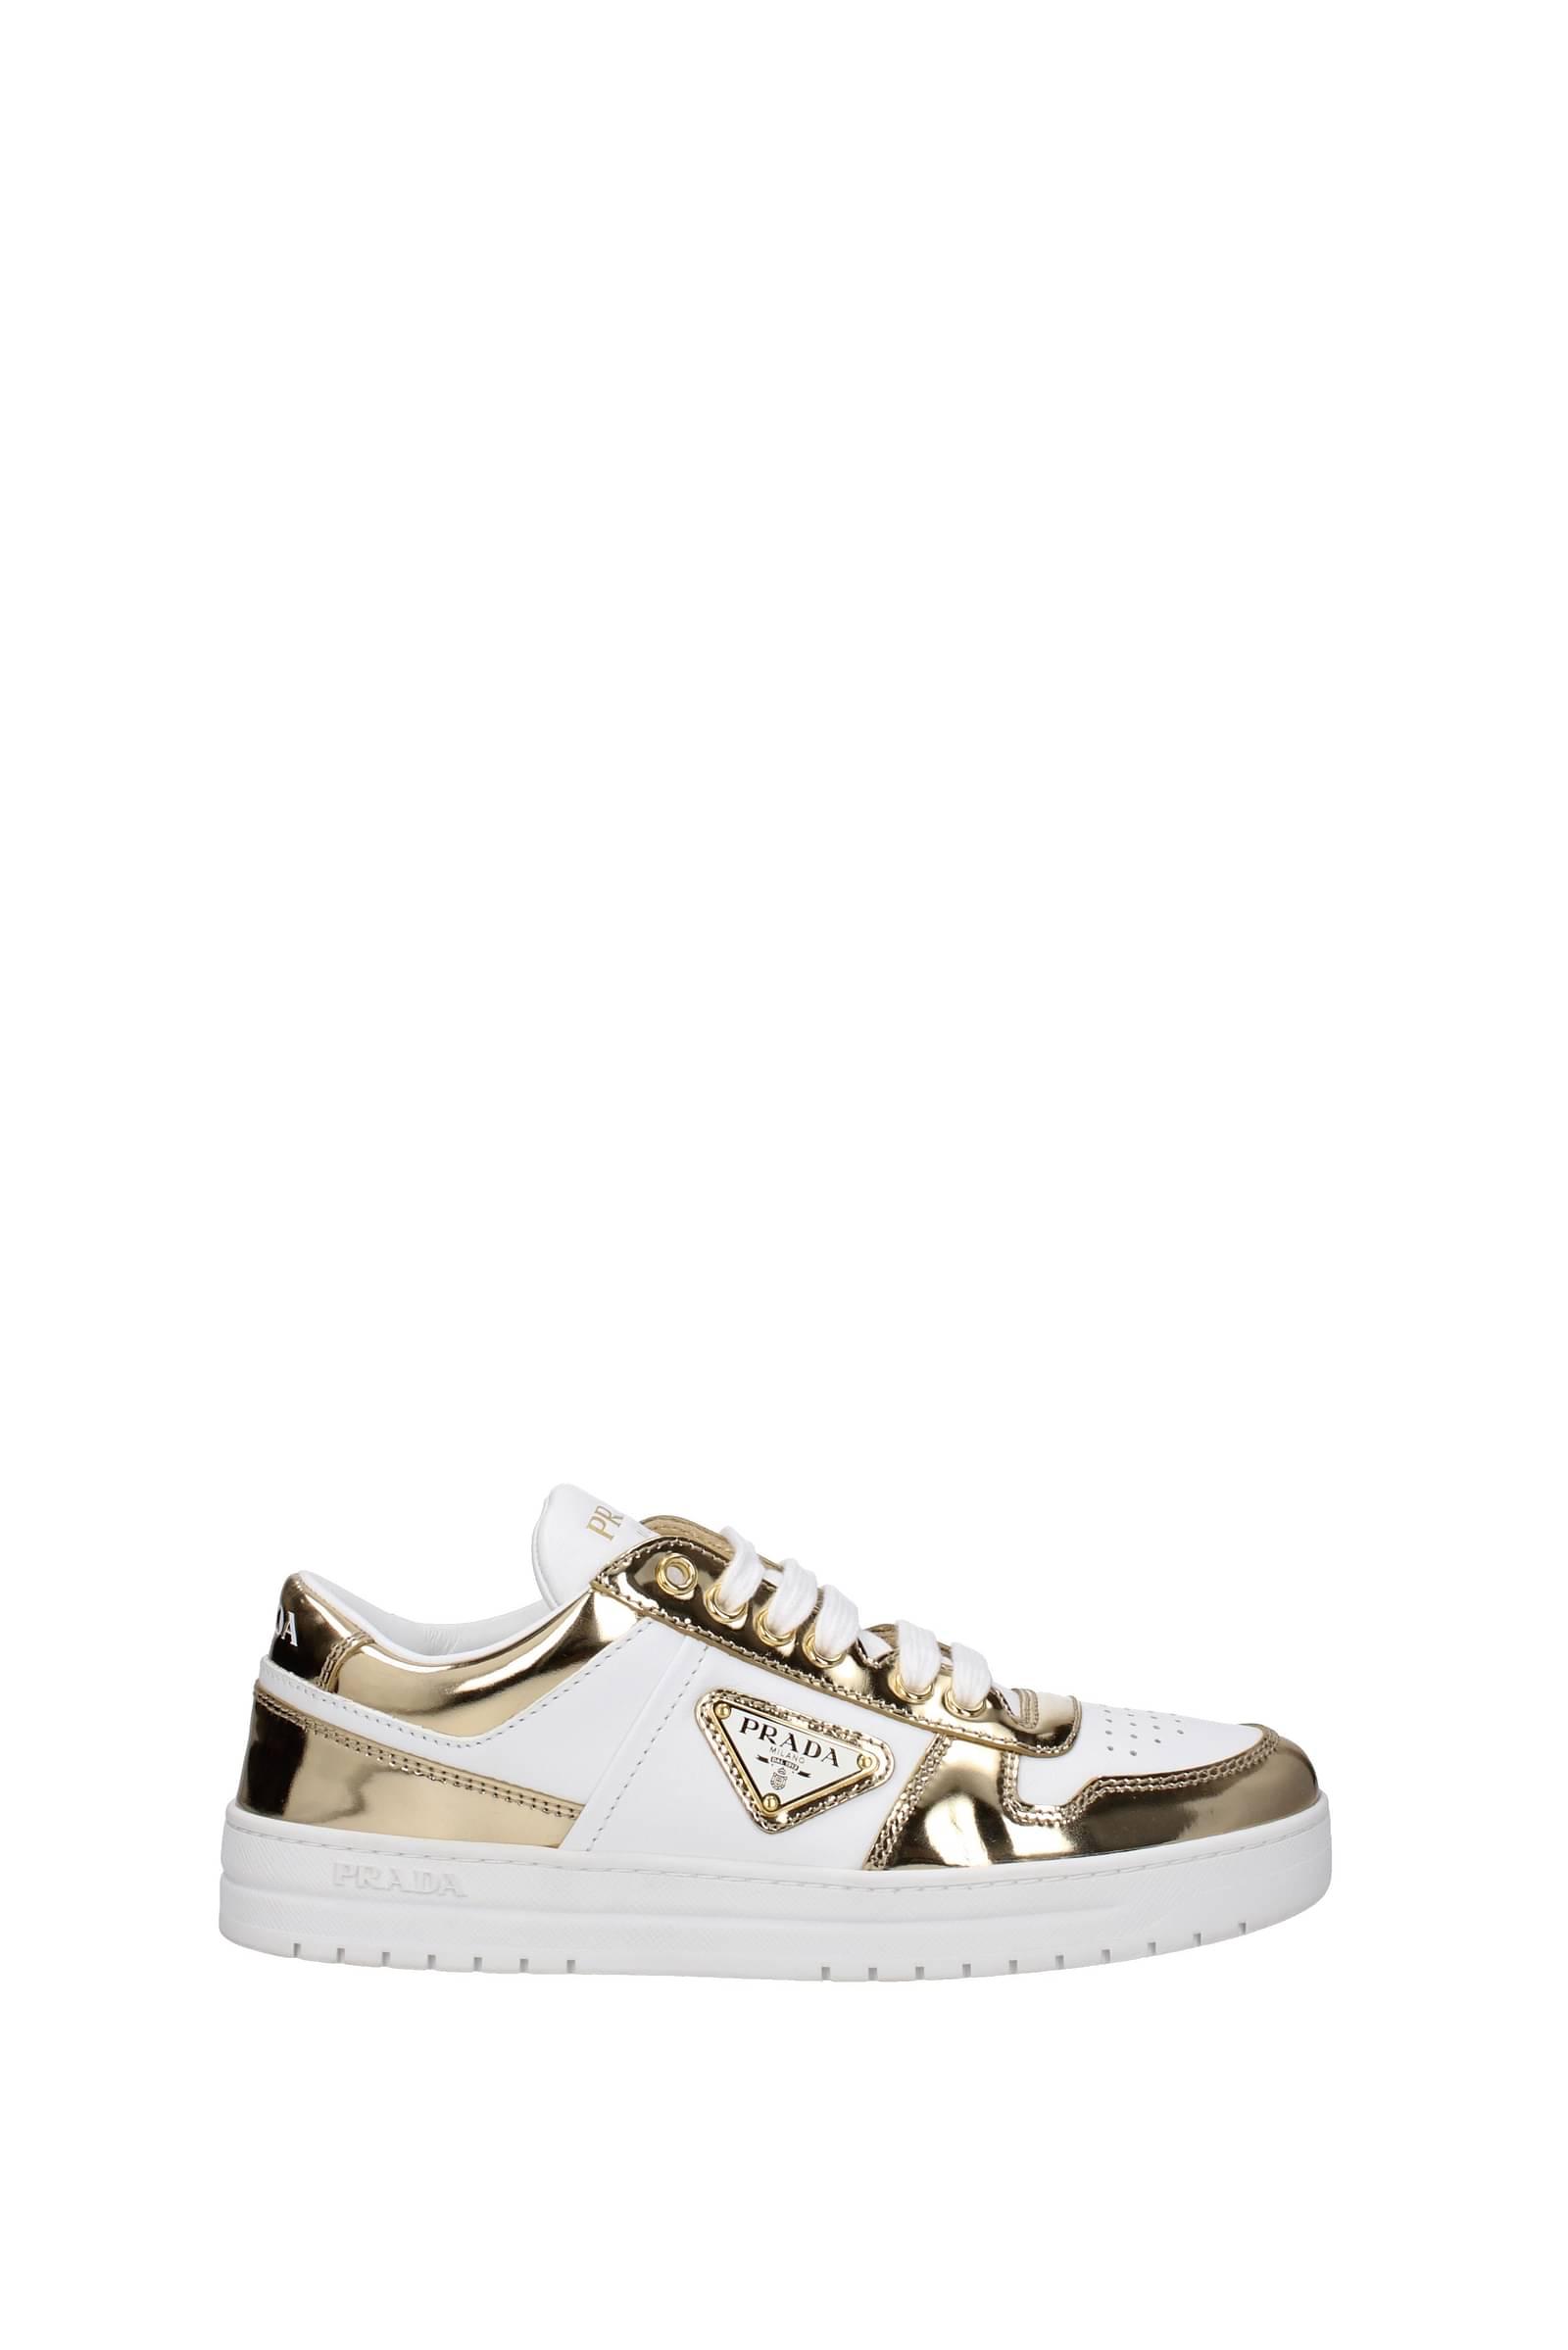 Prada Gold Leather Slip on Sneakers Size 40 Prada | TLC